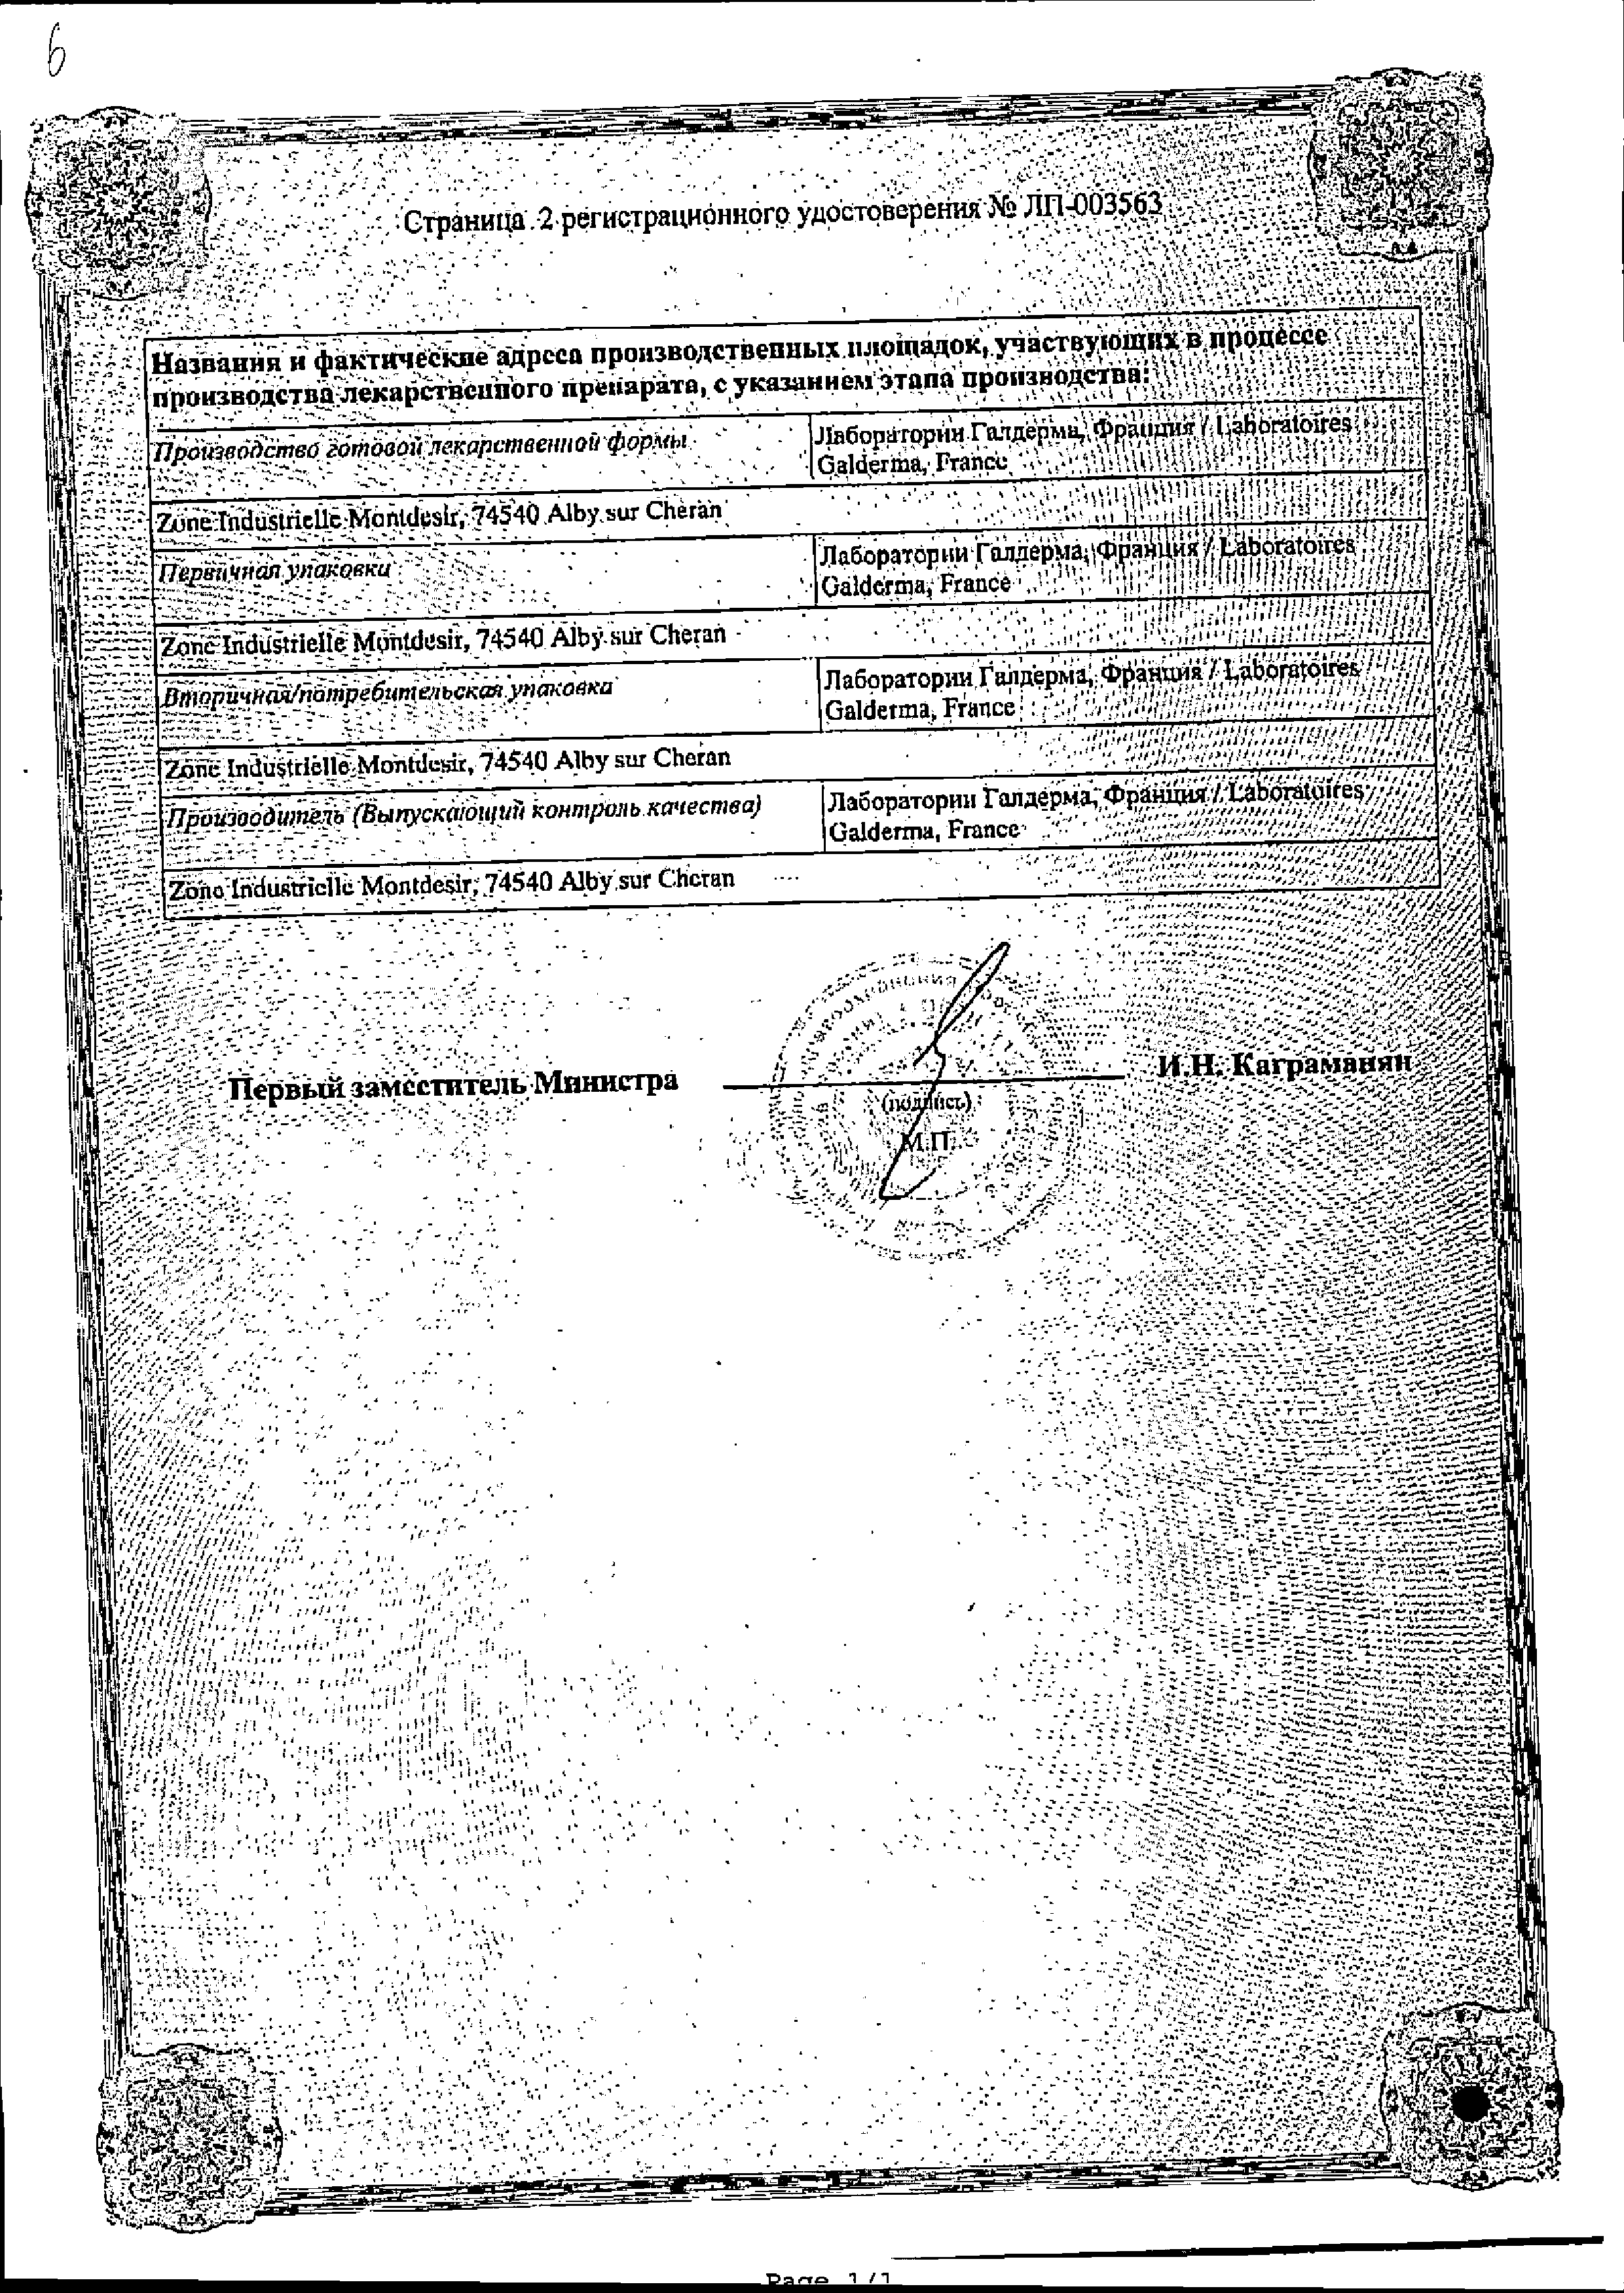 Мирвазо Дерм сертификат